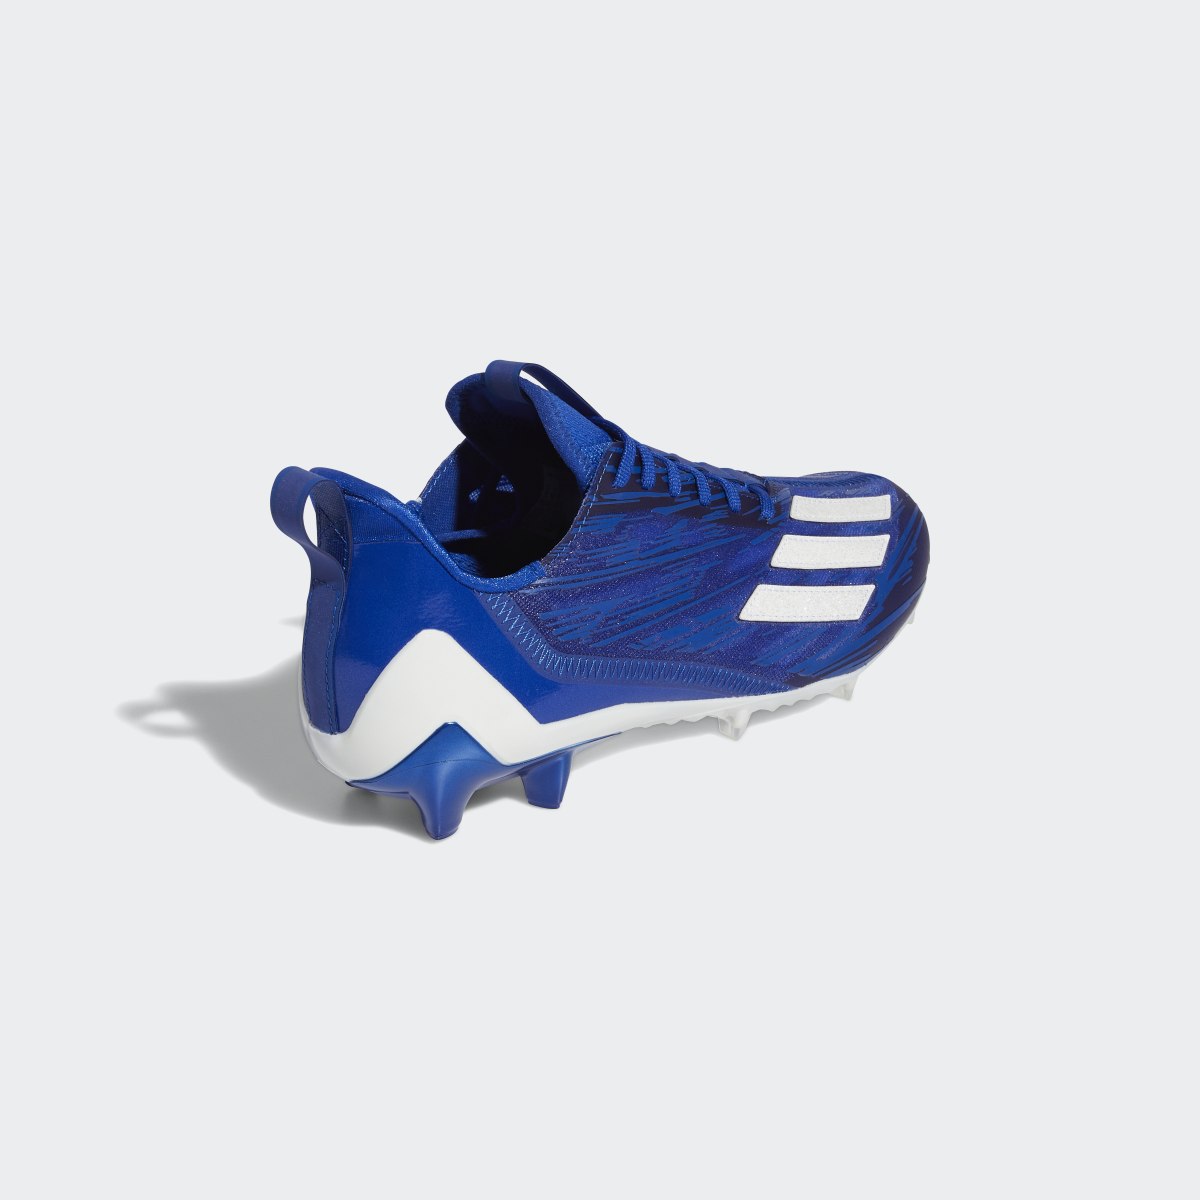 Adidas Adizero Cleats. 6